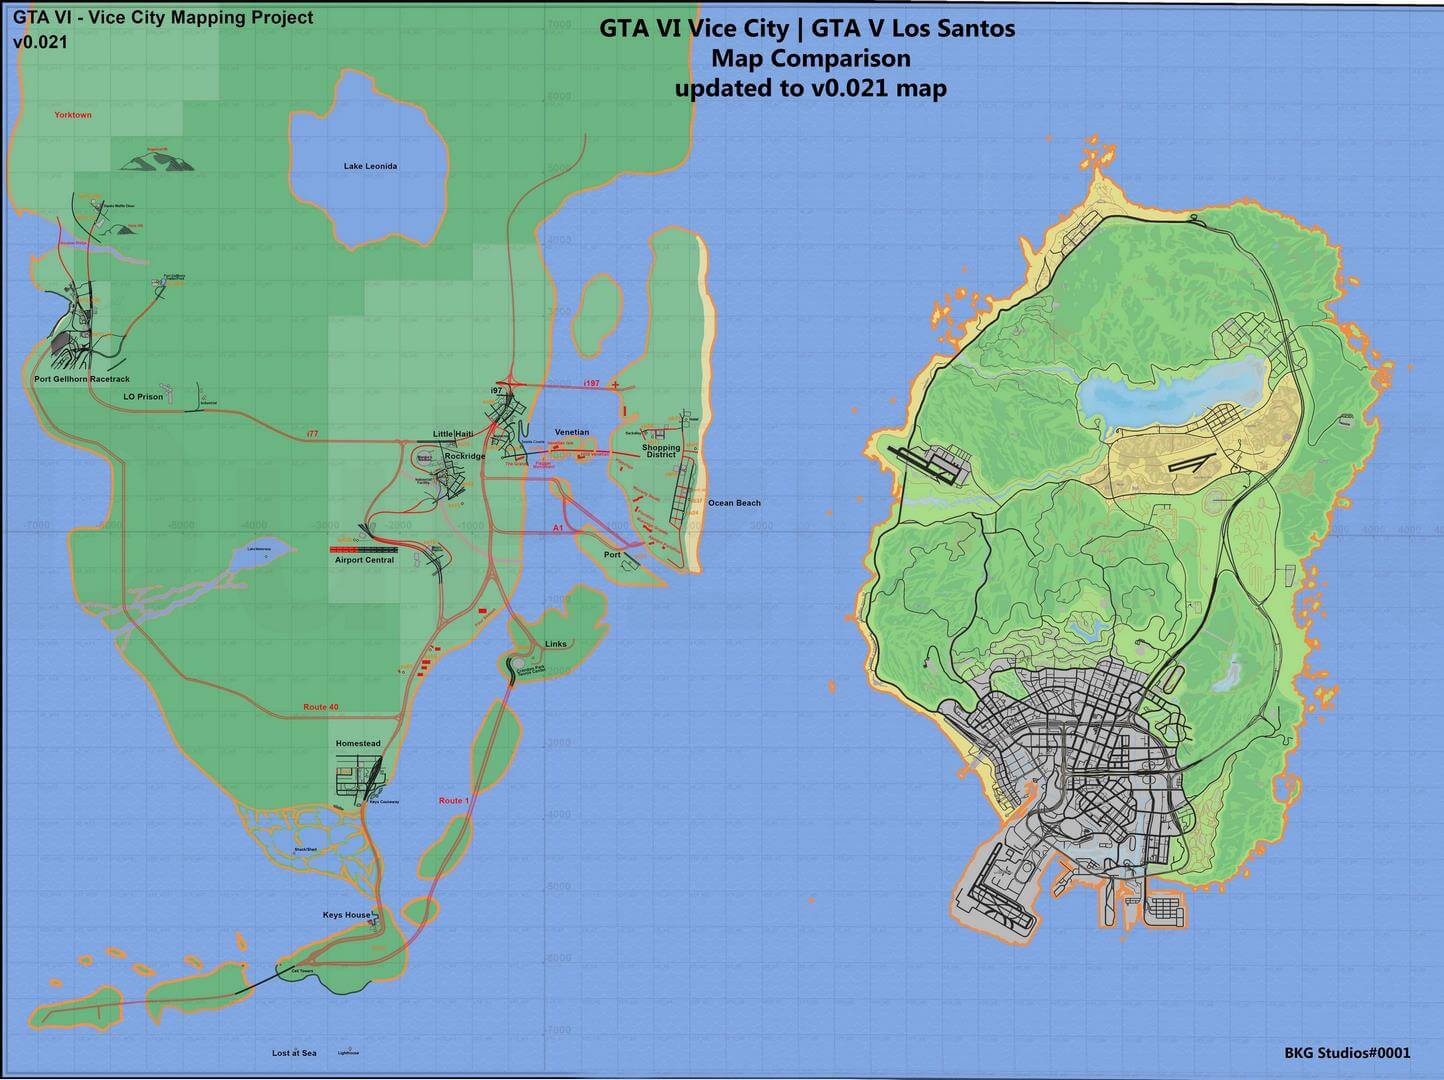 gta-6-map-comparison مقایسه نقشه جی تی ای 6 gta vi با جی تی ای 5 gta v